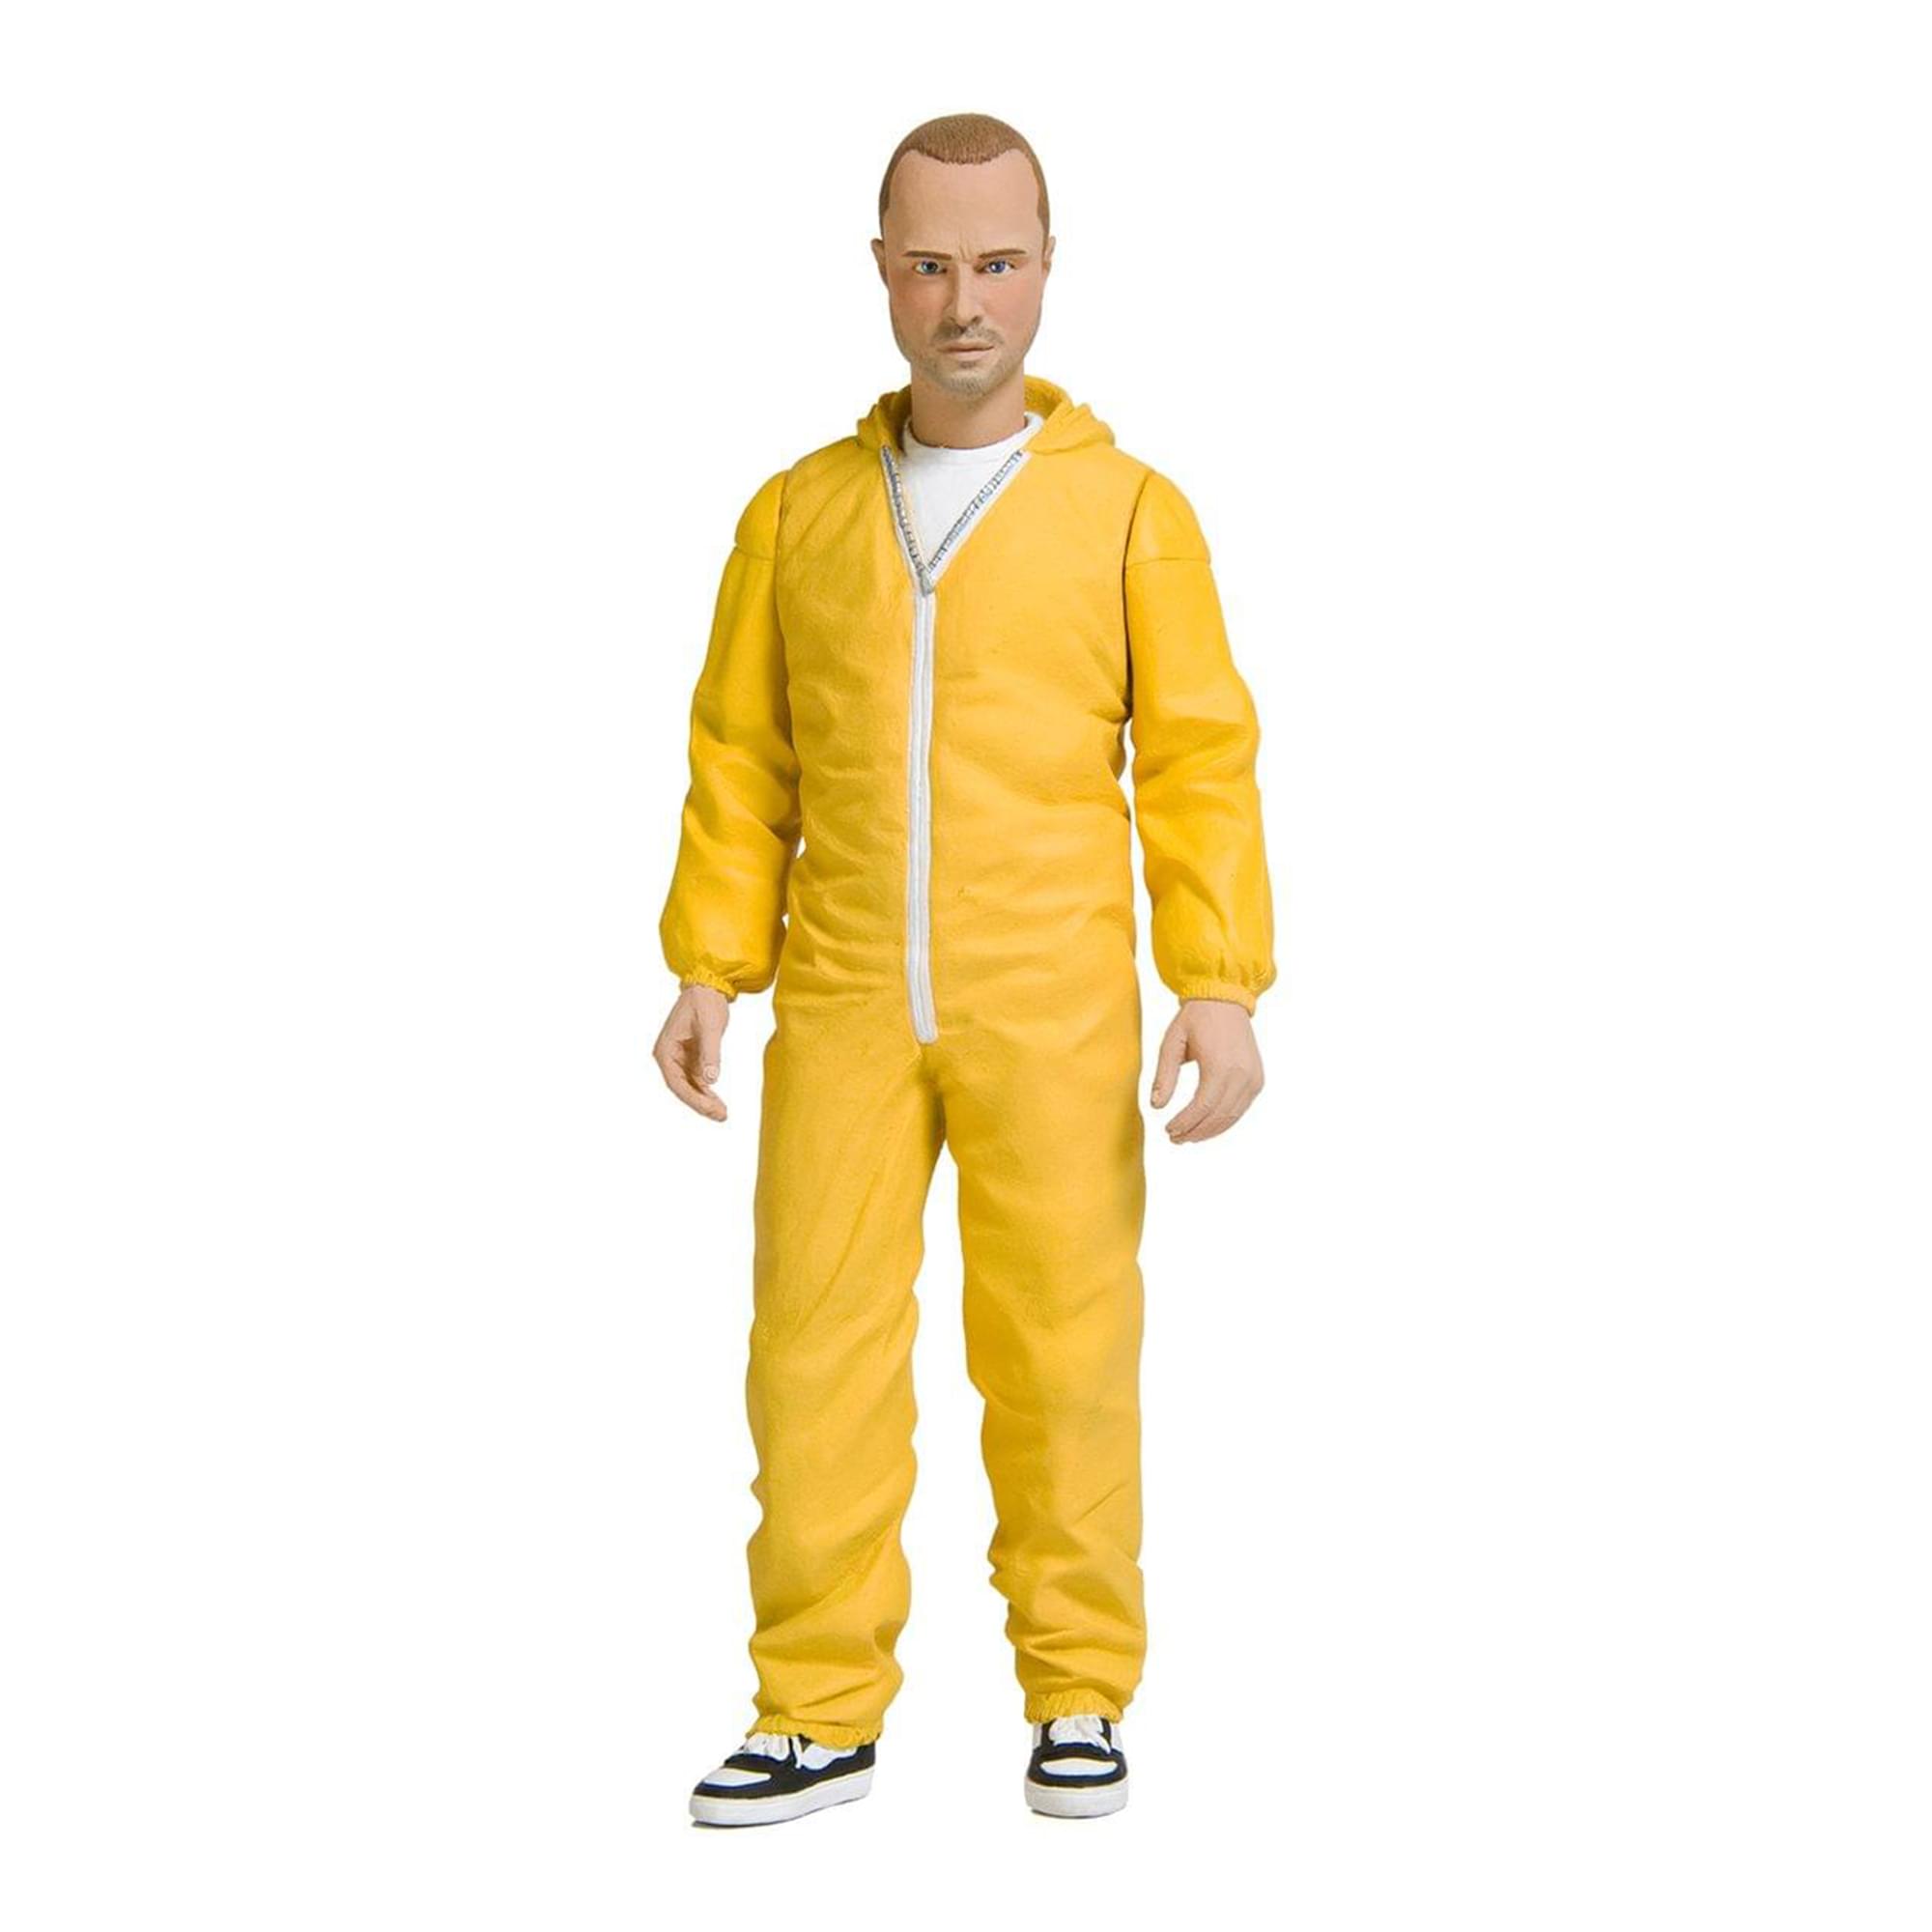 Mezco Toyz Breaking Bad Jesse Pinkman 6" Yellow Hazmat Suit Figure - image 1 of 3